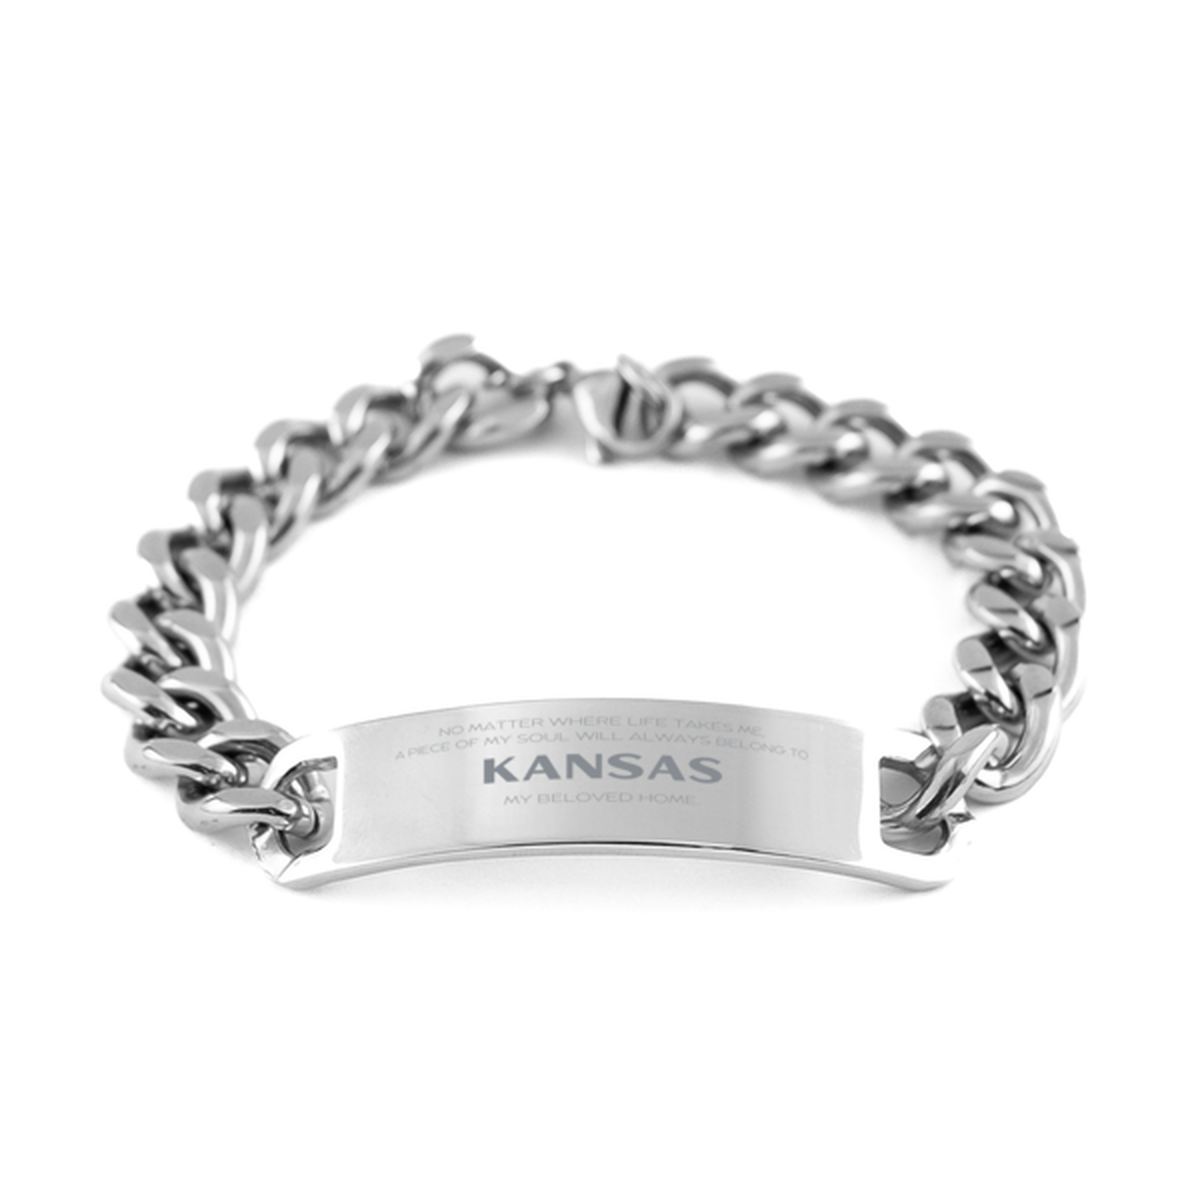 Love Kansas State Gifts, My soul will always belong to Kansas, Proud Cuban Chain Stainless Steel Bracelet, Birthday Unique Gifts For Kansas Men, Women, Friends